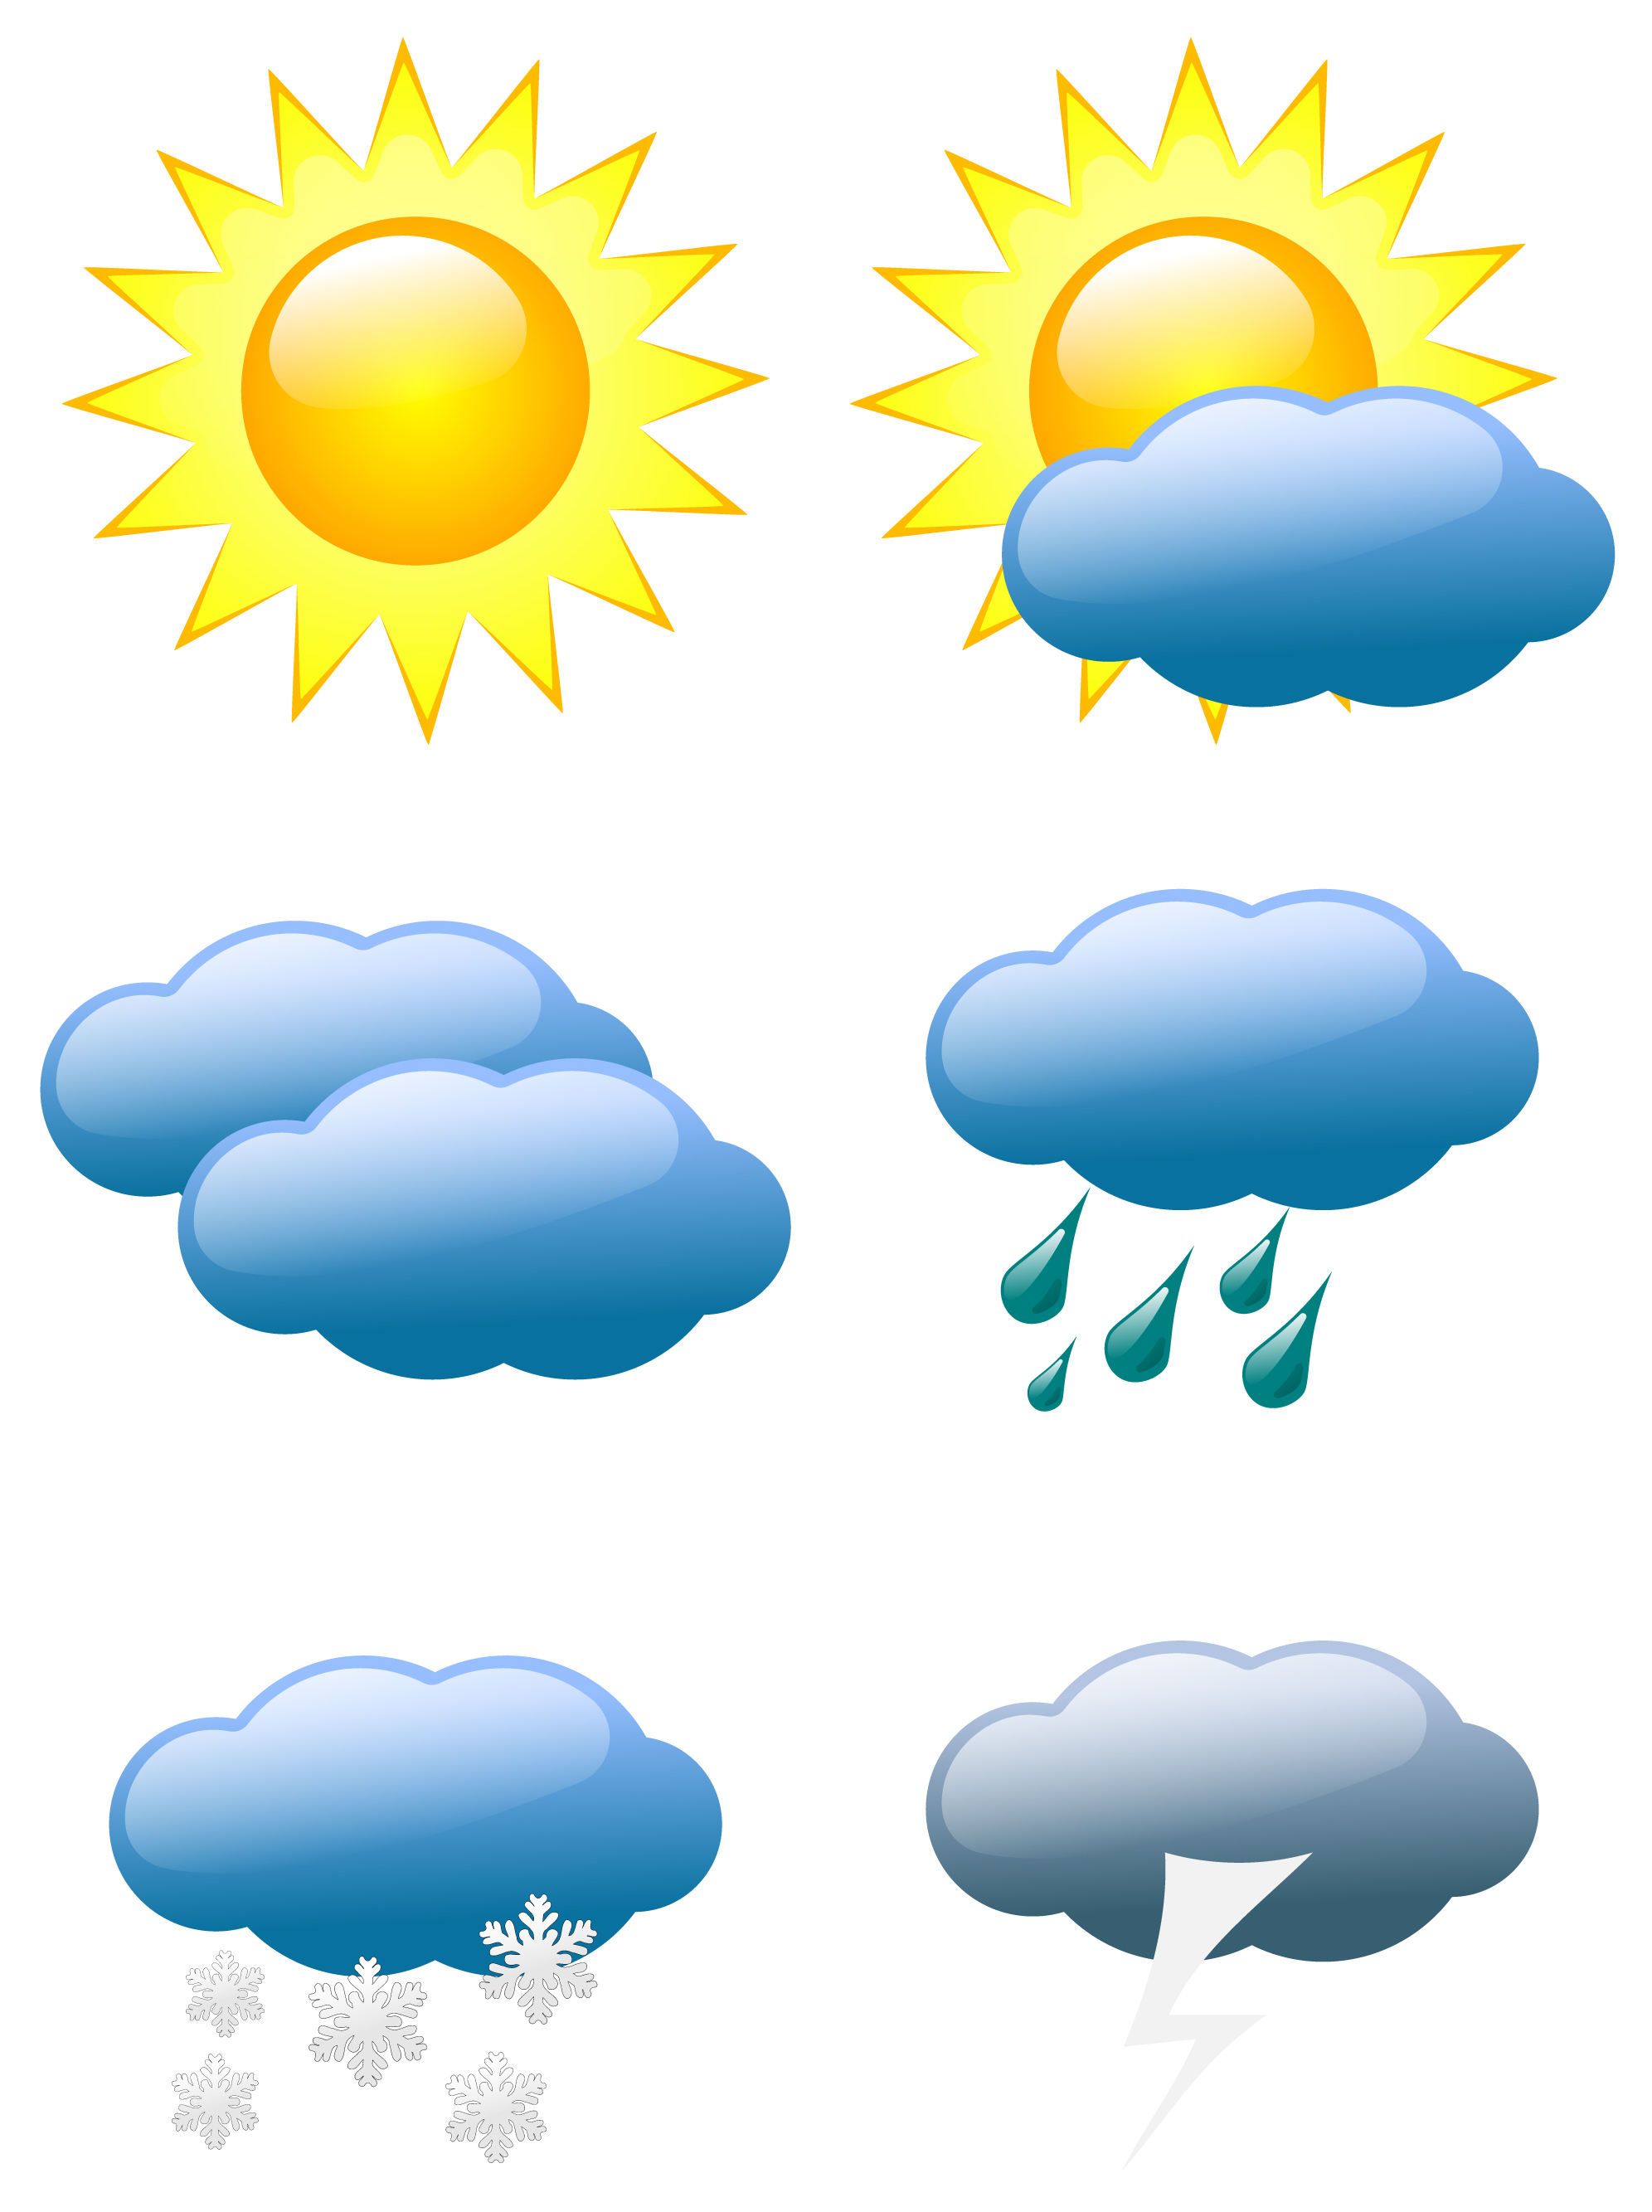 free-weather-symbols-images-download-free-weather-symbols-images-png